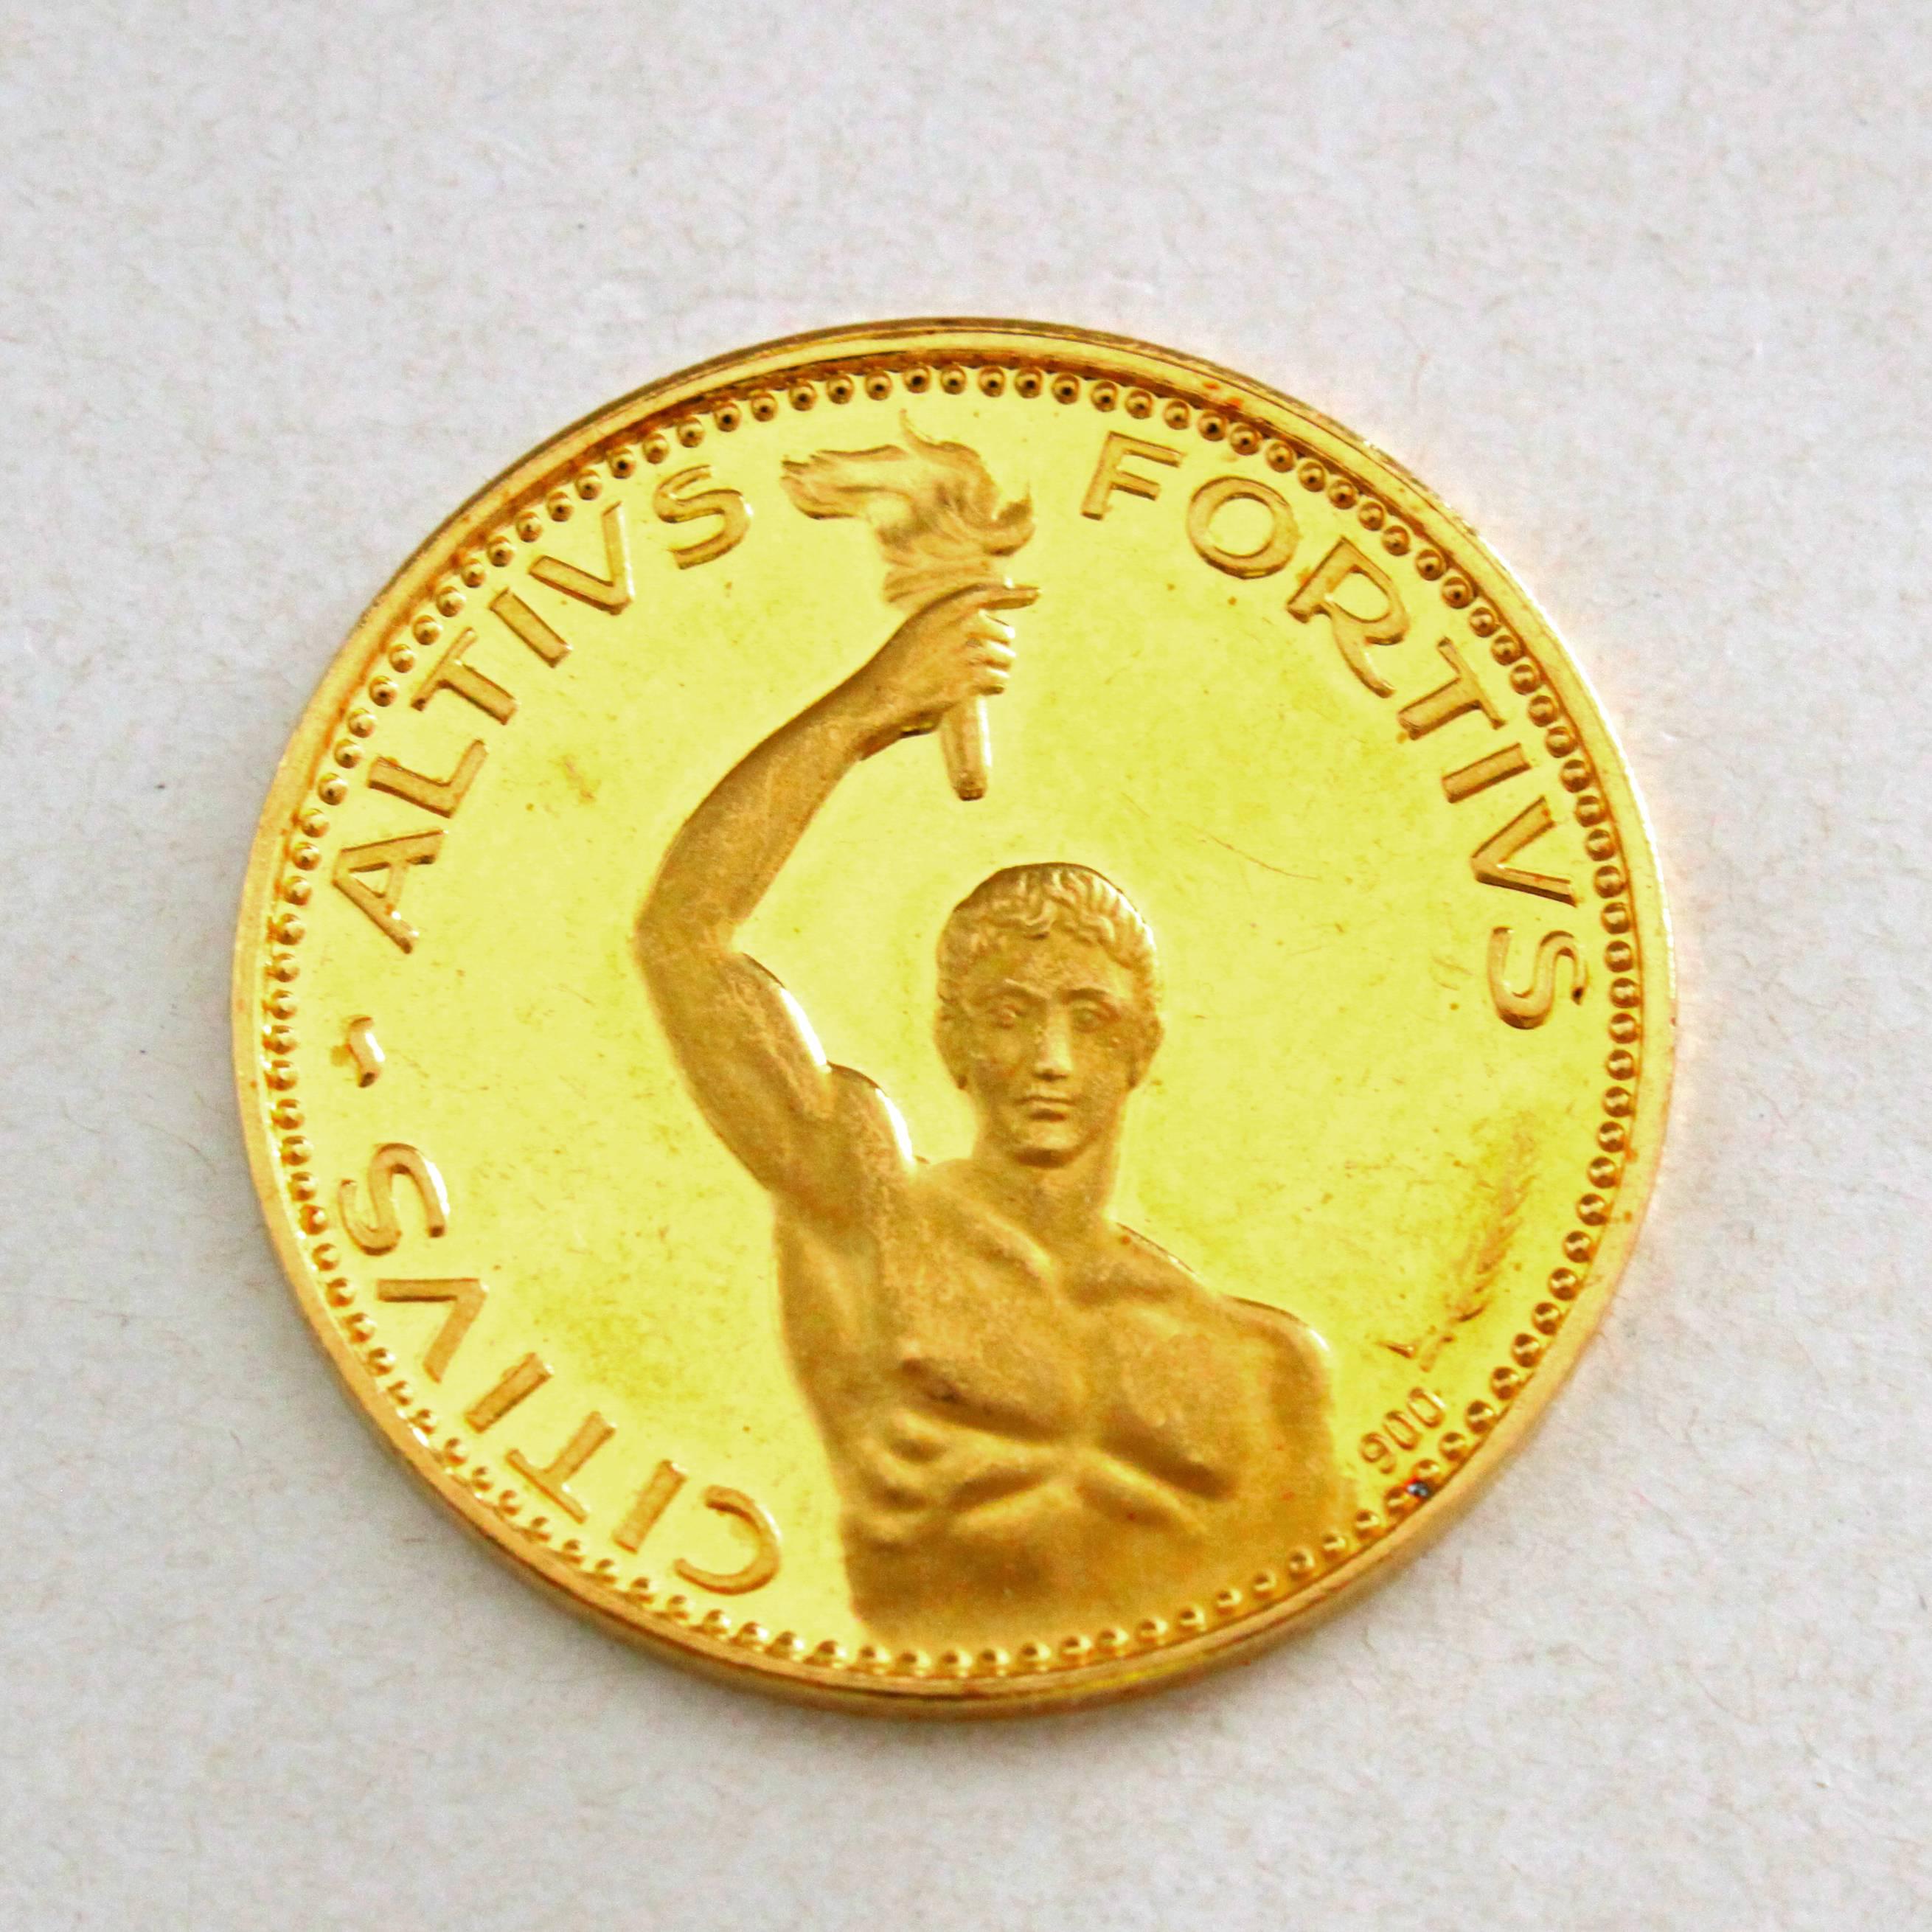 1970 gold coin